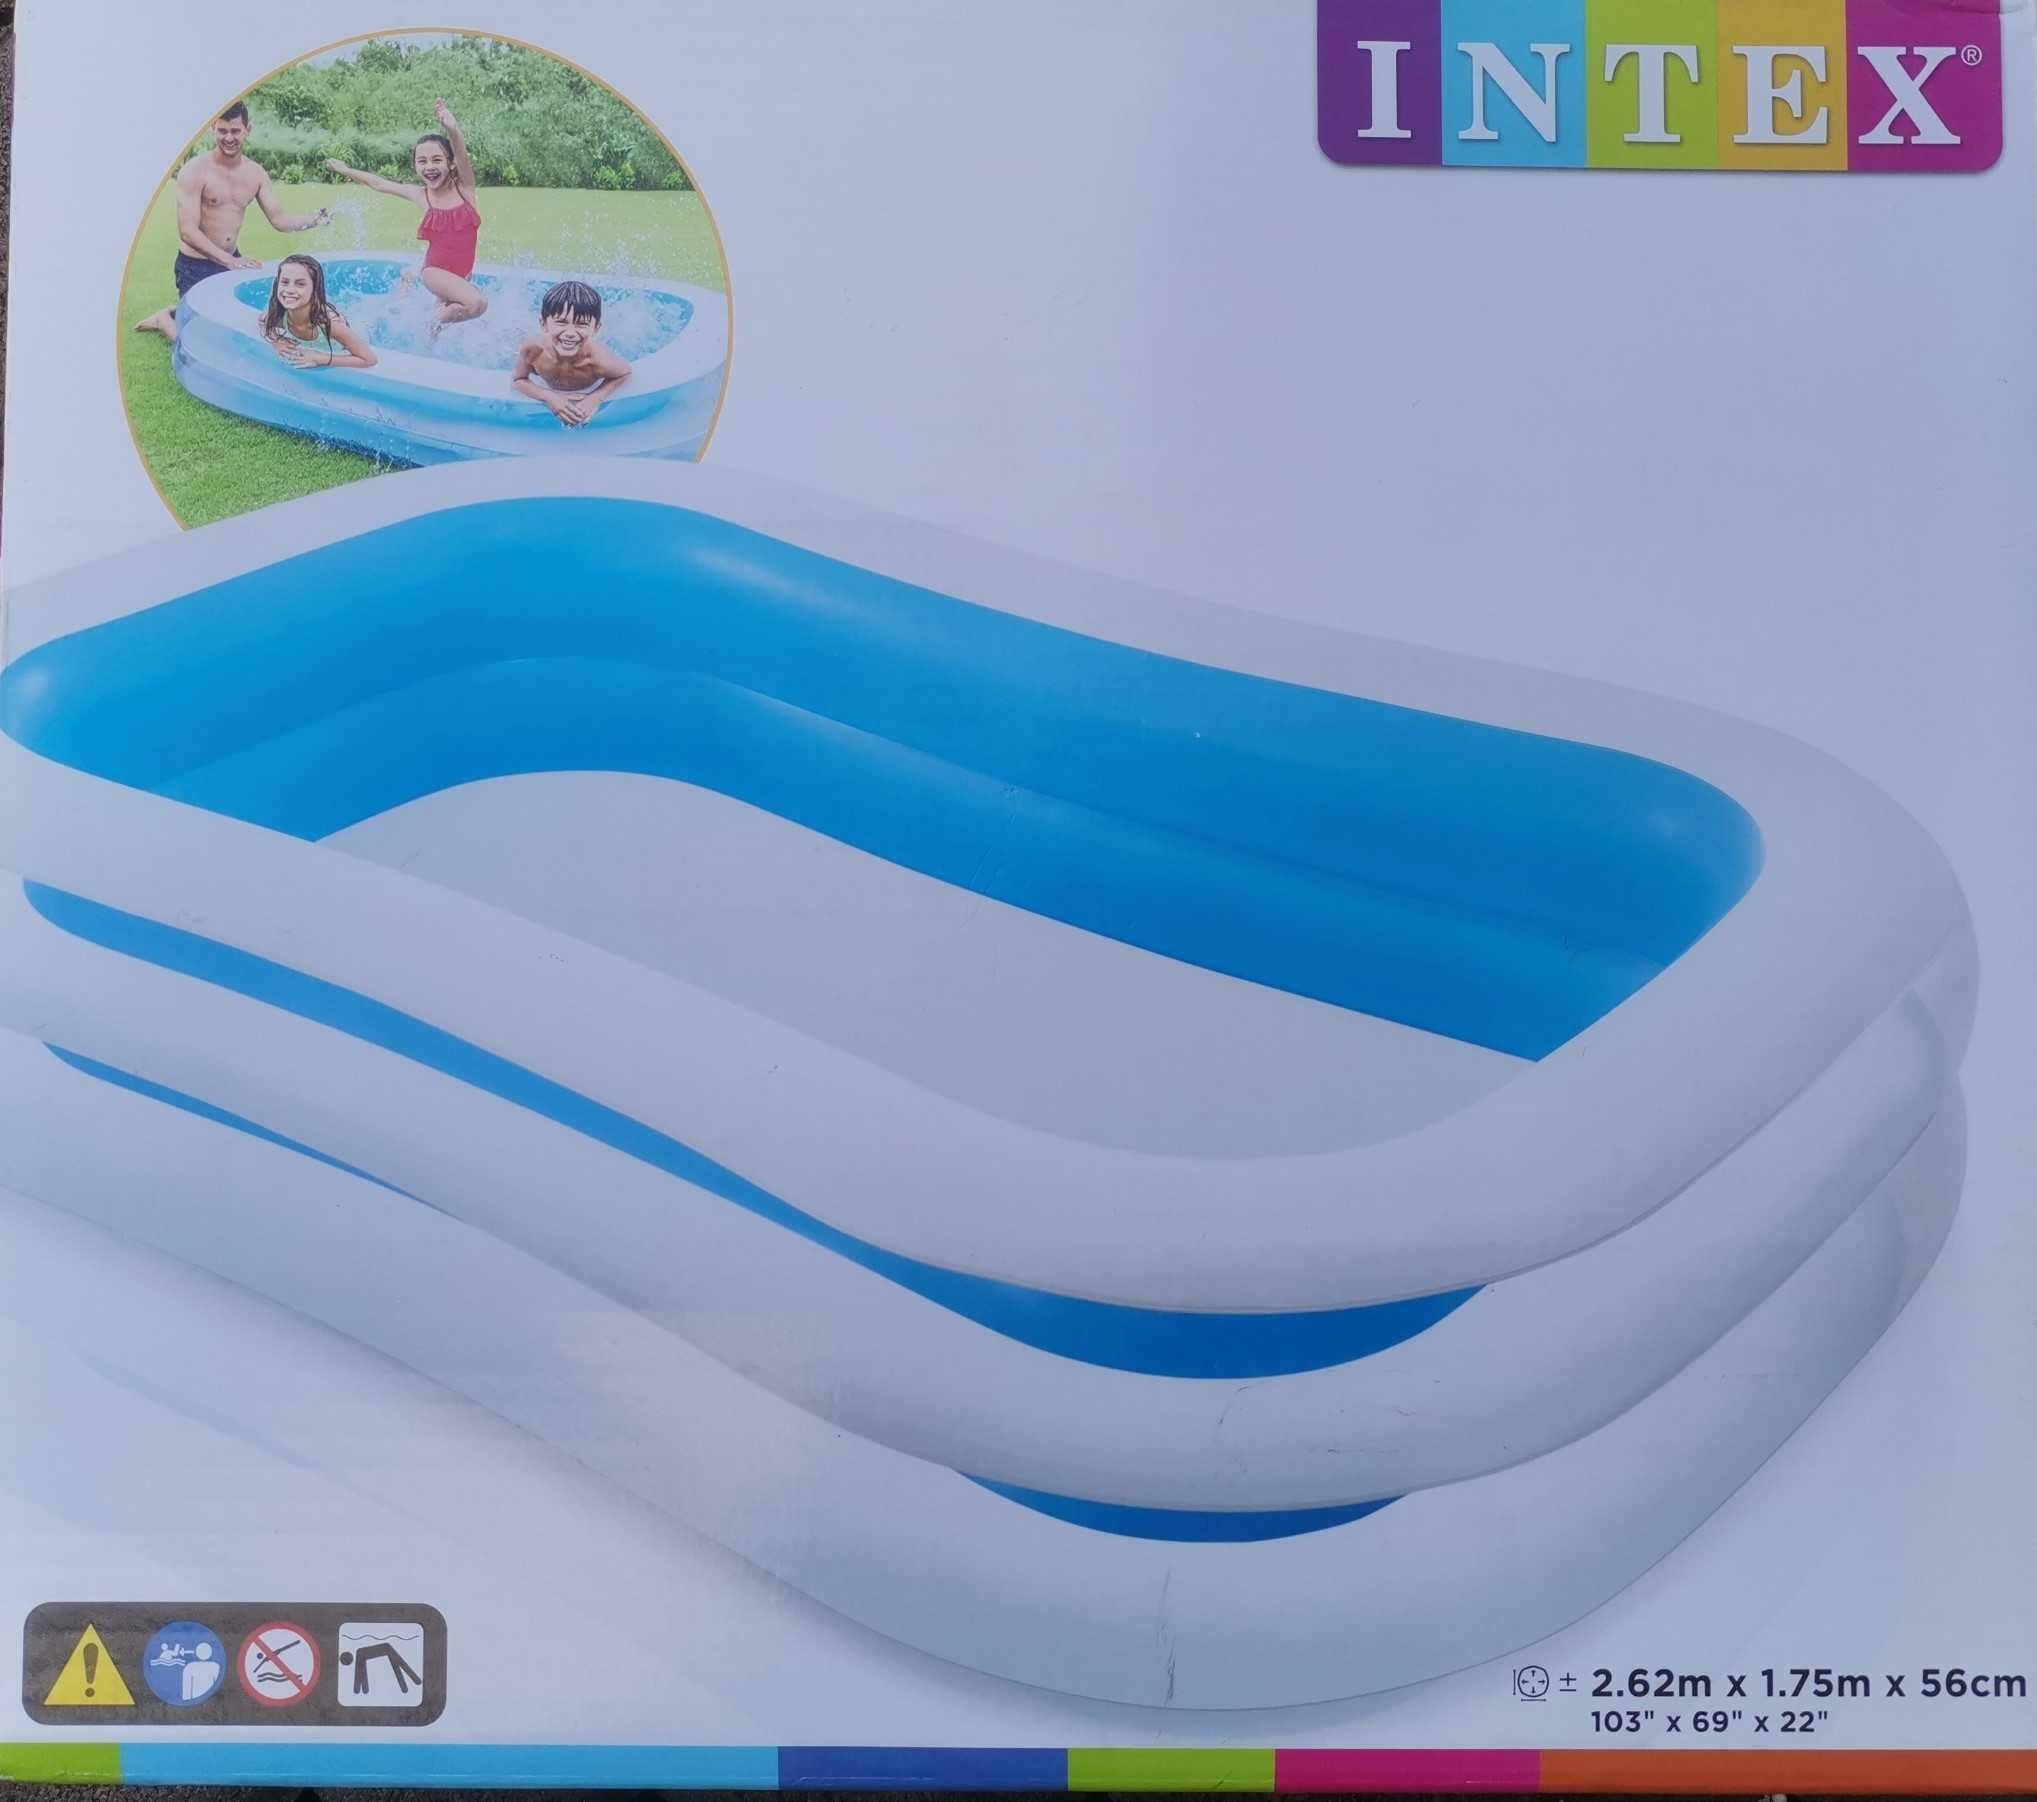 Nowy basen prostokątny Intex 264 x 178 cm, pompowany